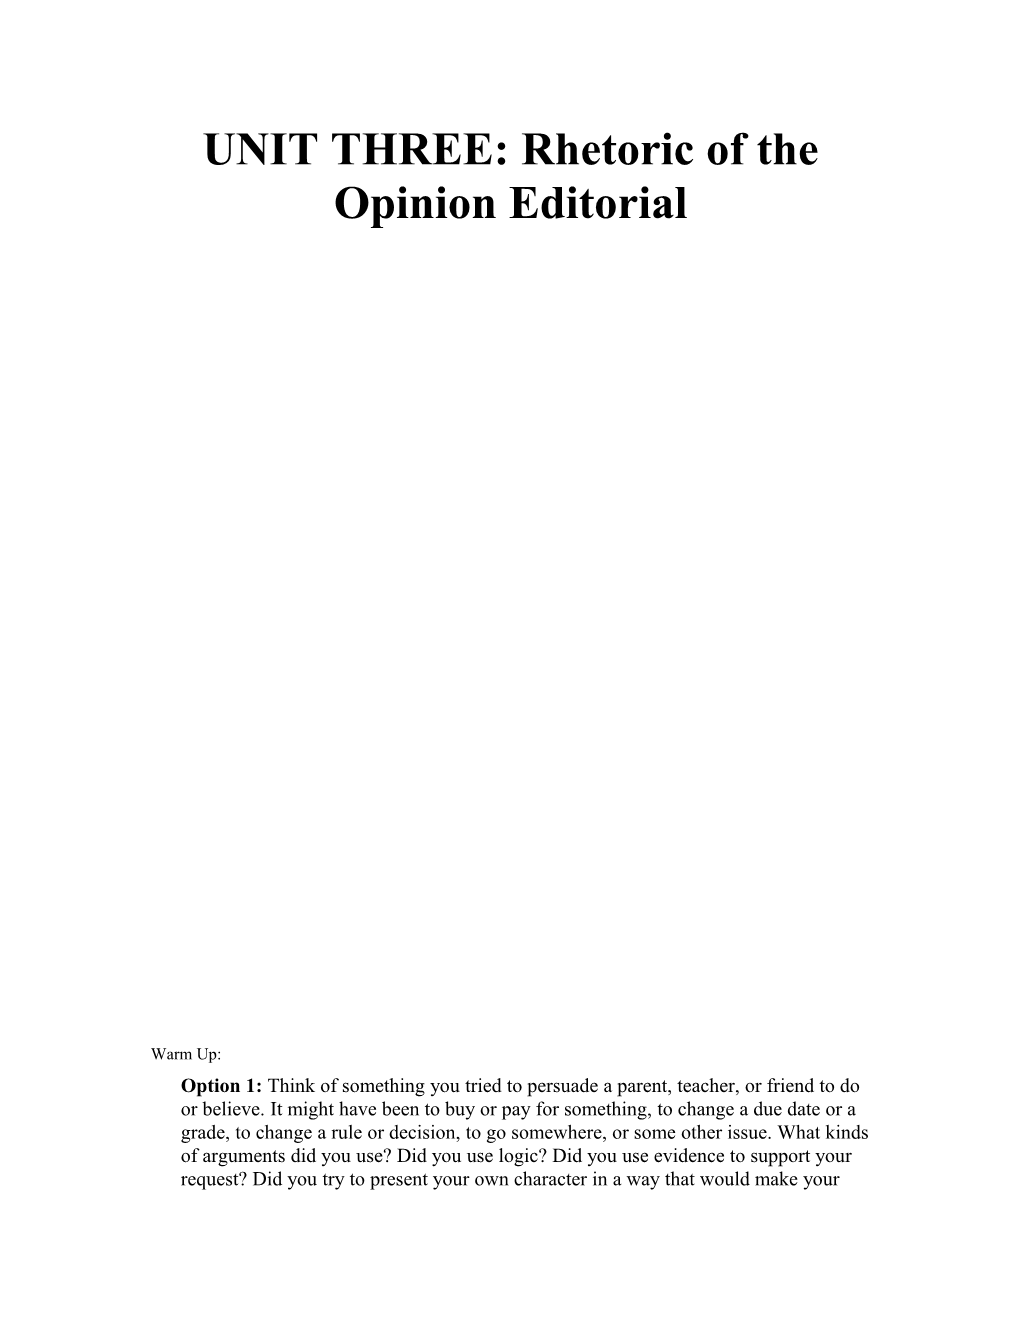 UNIT THREE: Rhetoric of the Opinion Editorial